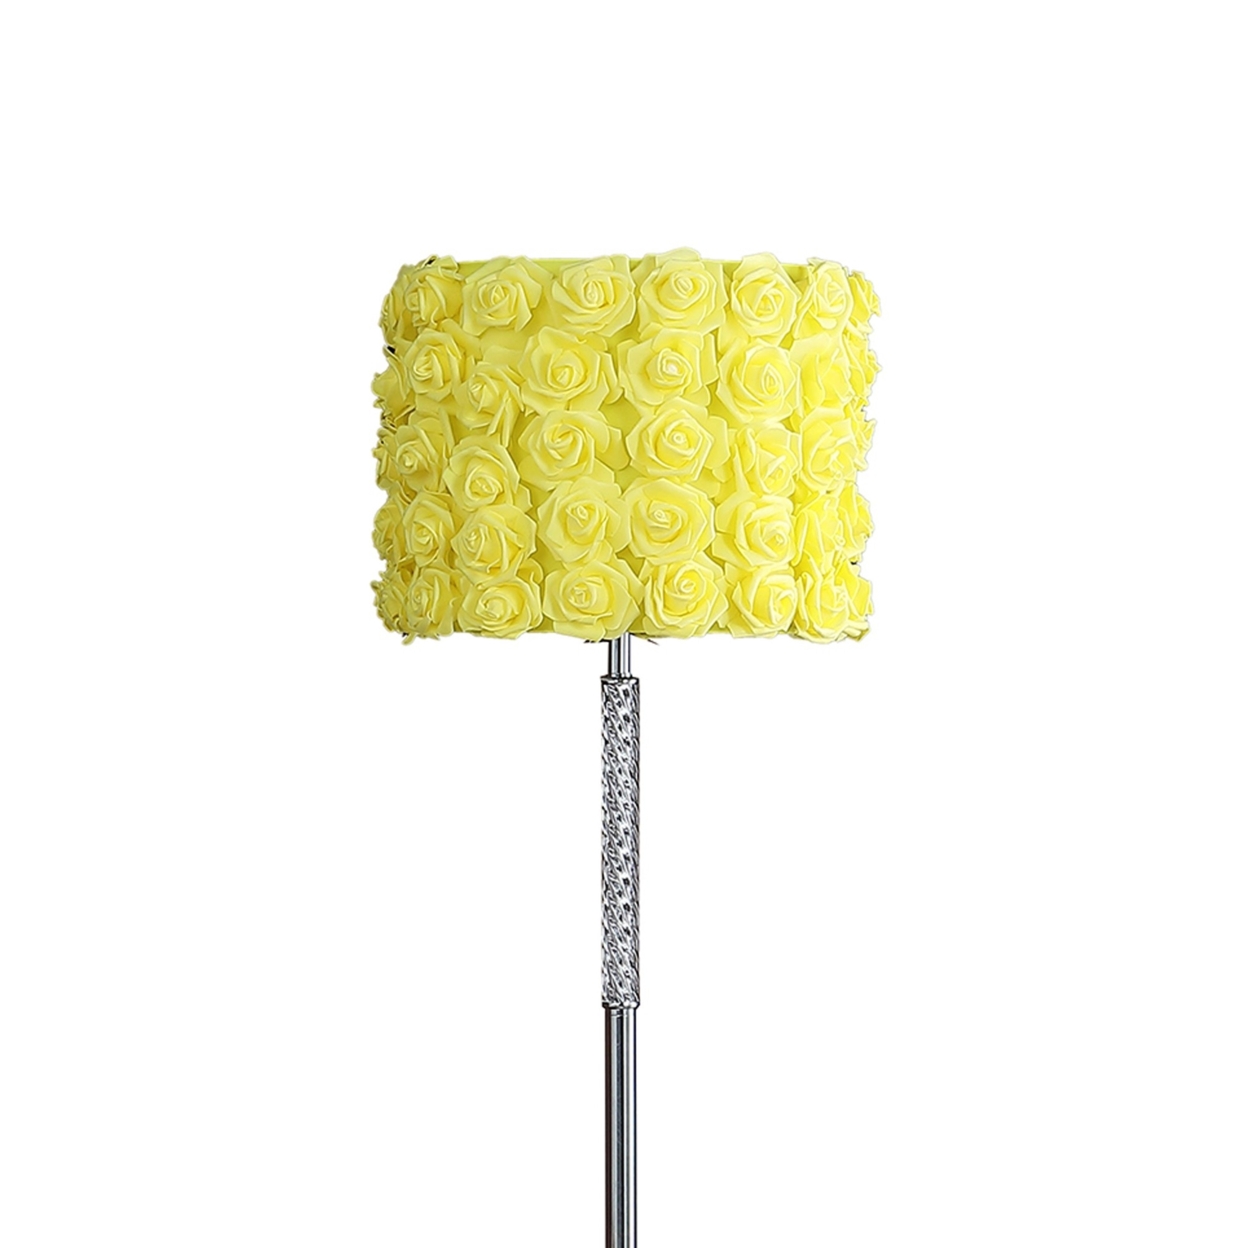 Finn 63 Inch Glamorous Floor Lamp, Rose Accent Shade, 100W, Yellow, Silver- Saltoro Sherpi